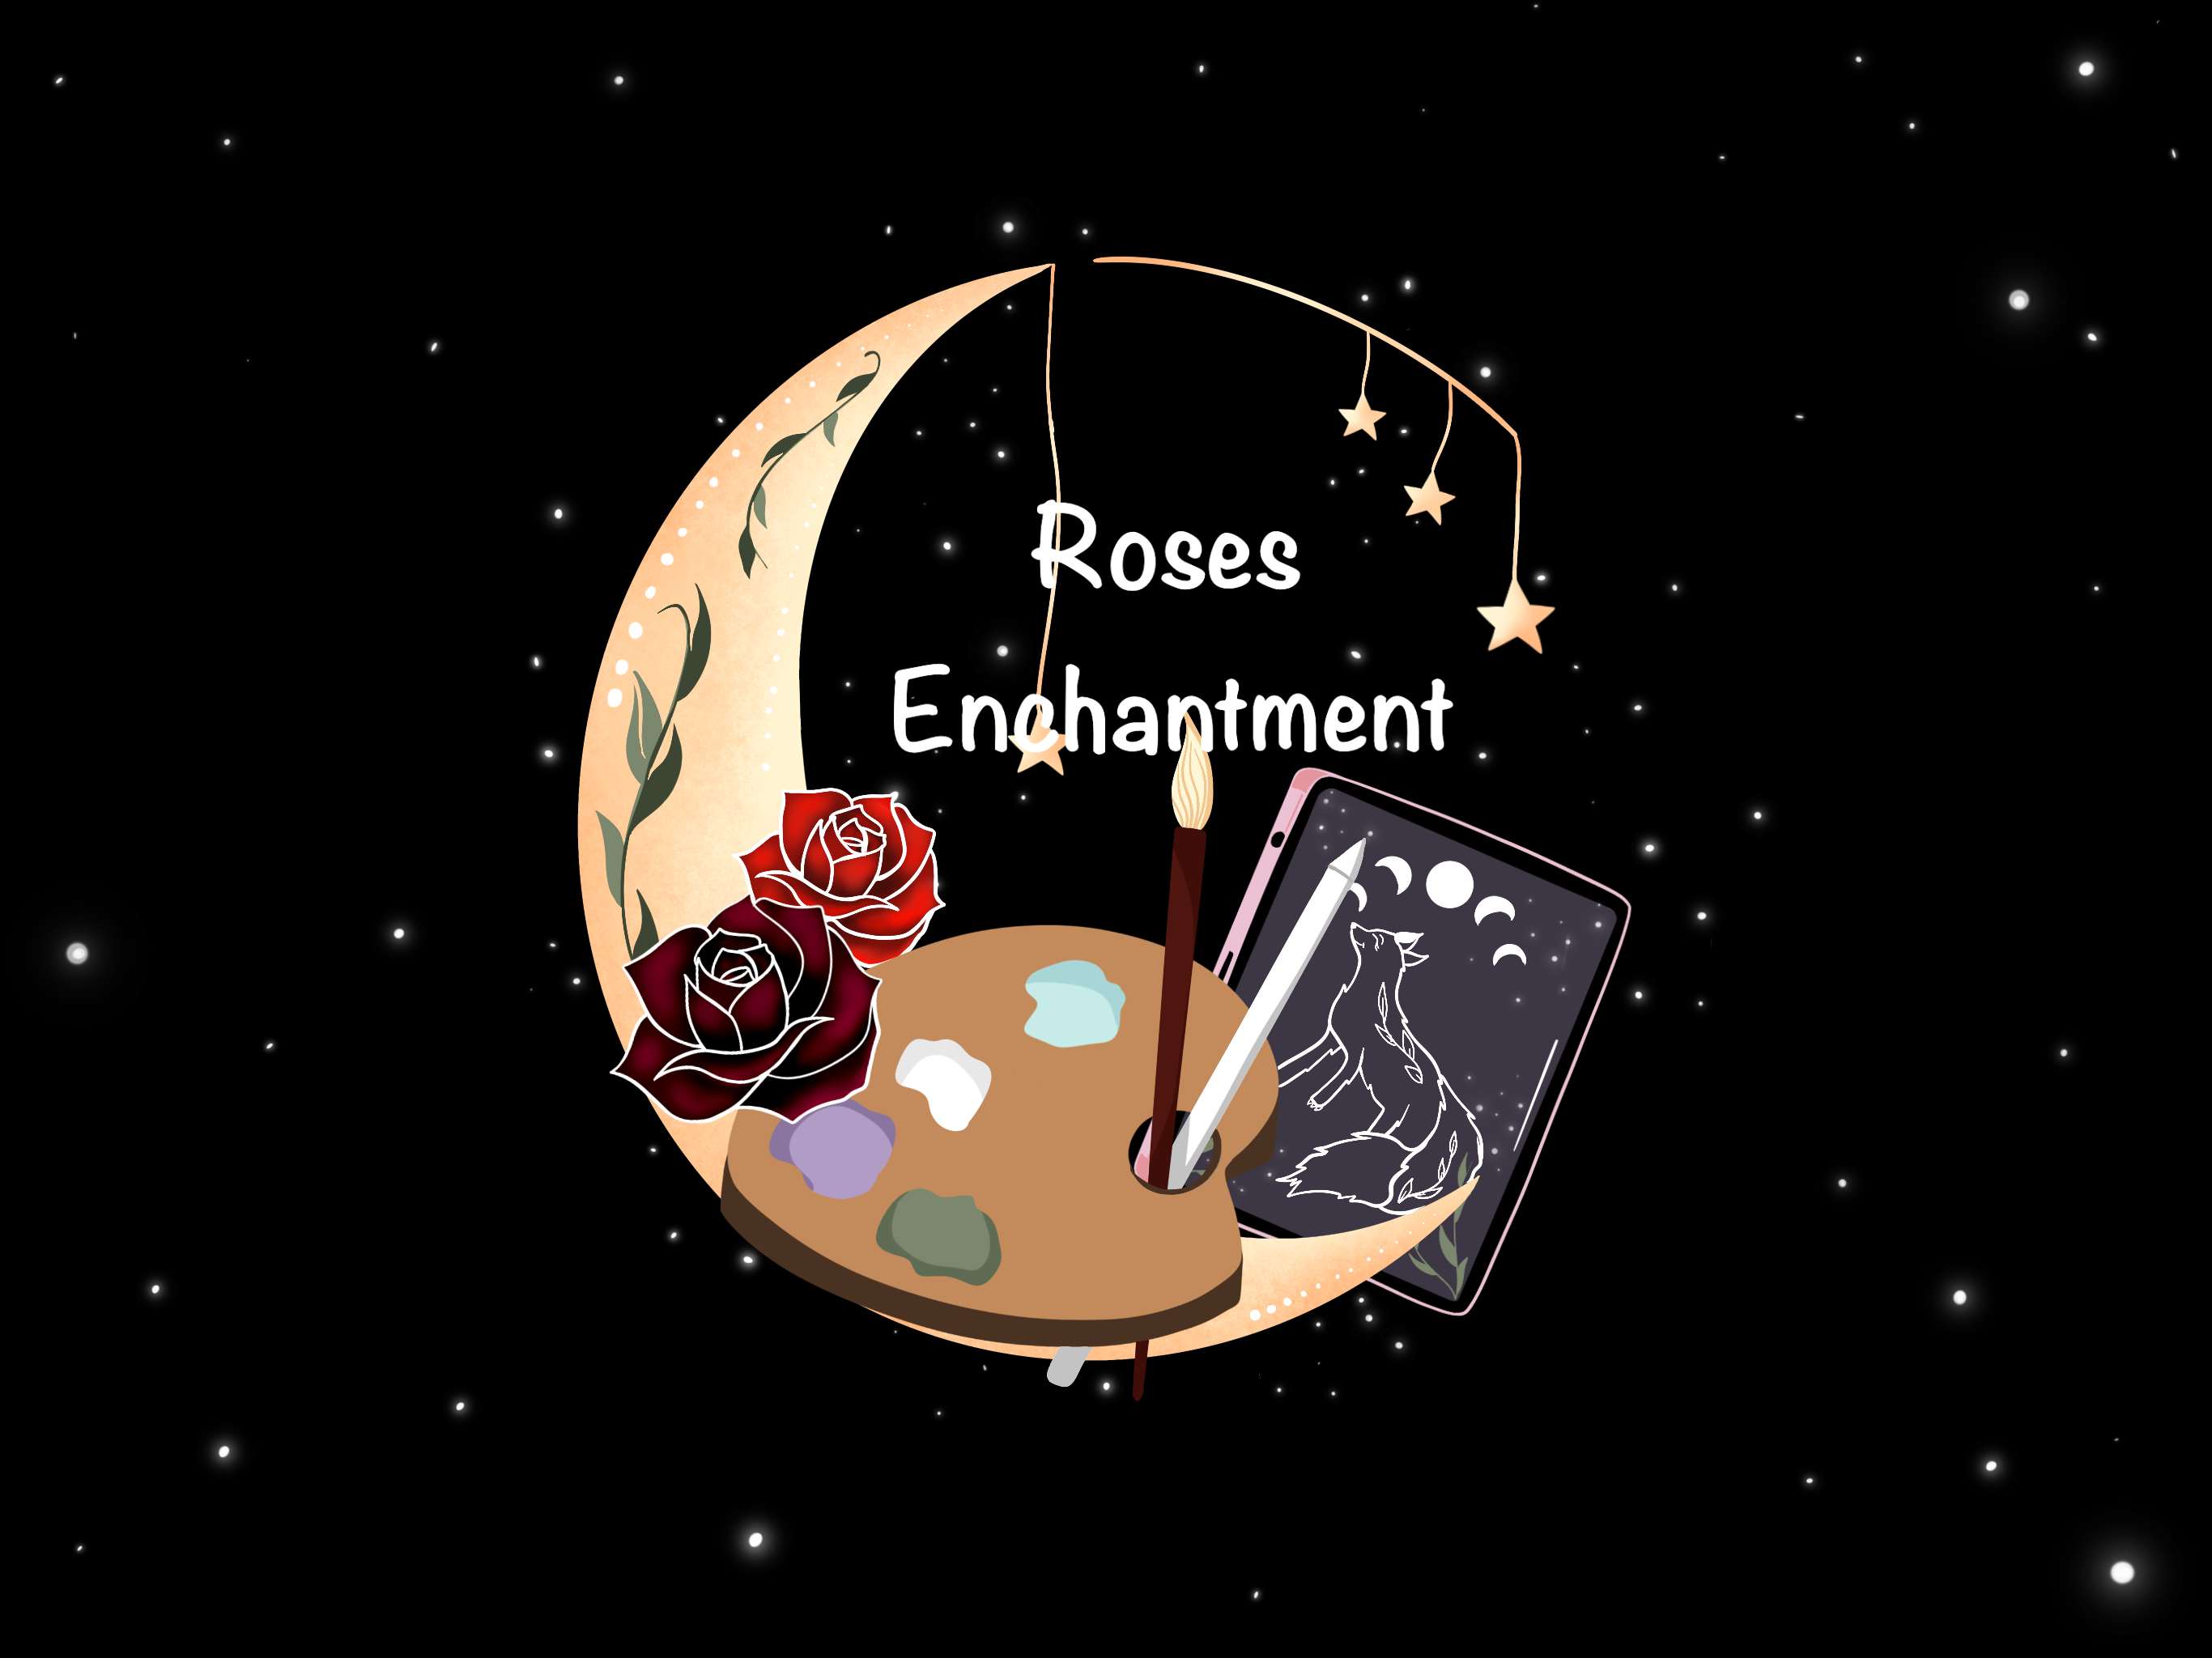 RosesEnchantment